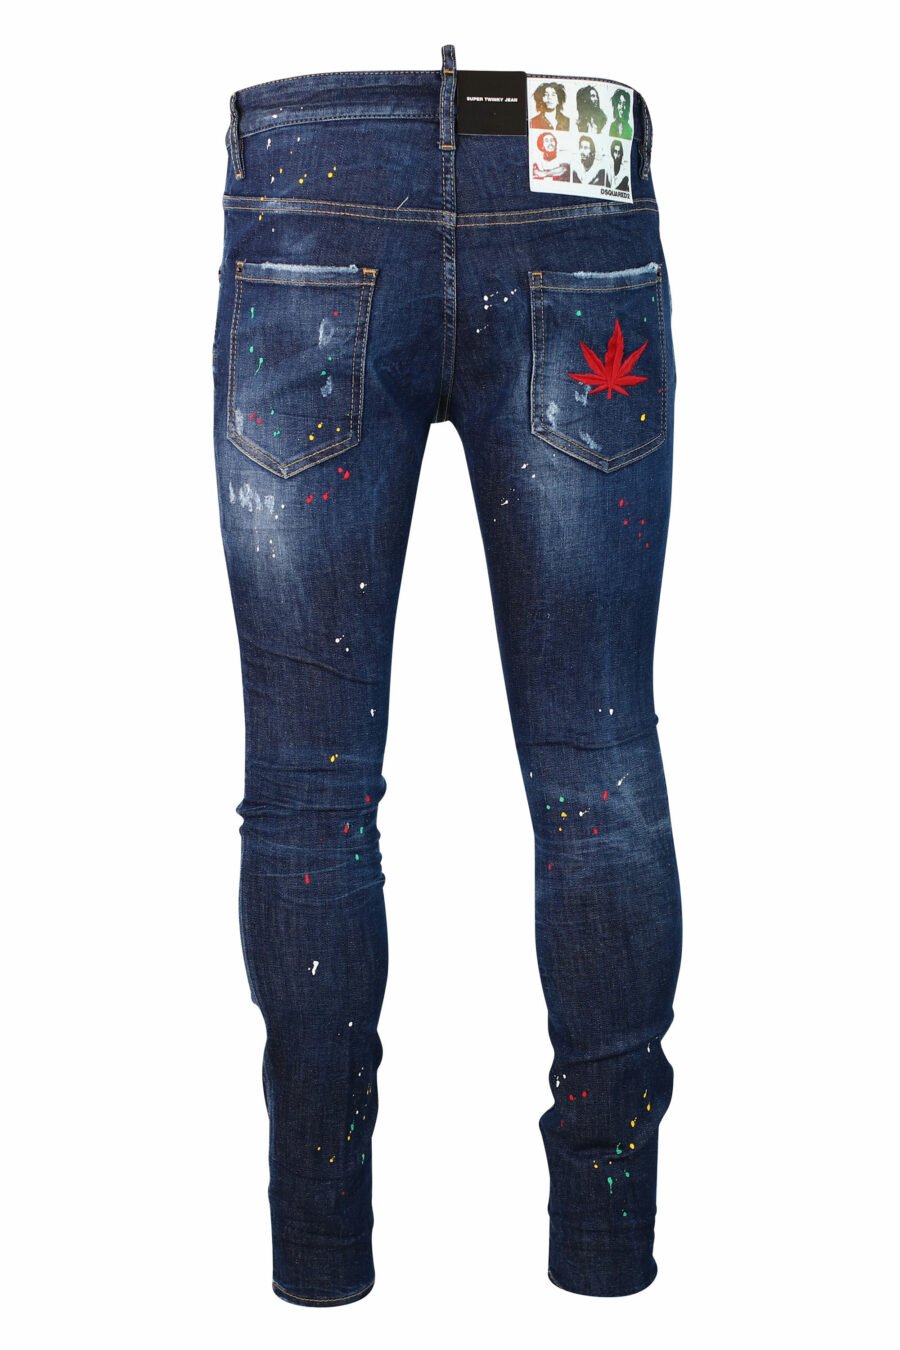 Blue jeans "super twinky jean" worn "bob marley" - IMG 9924 1